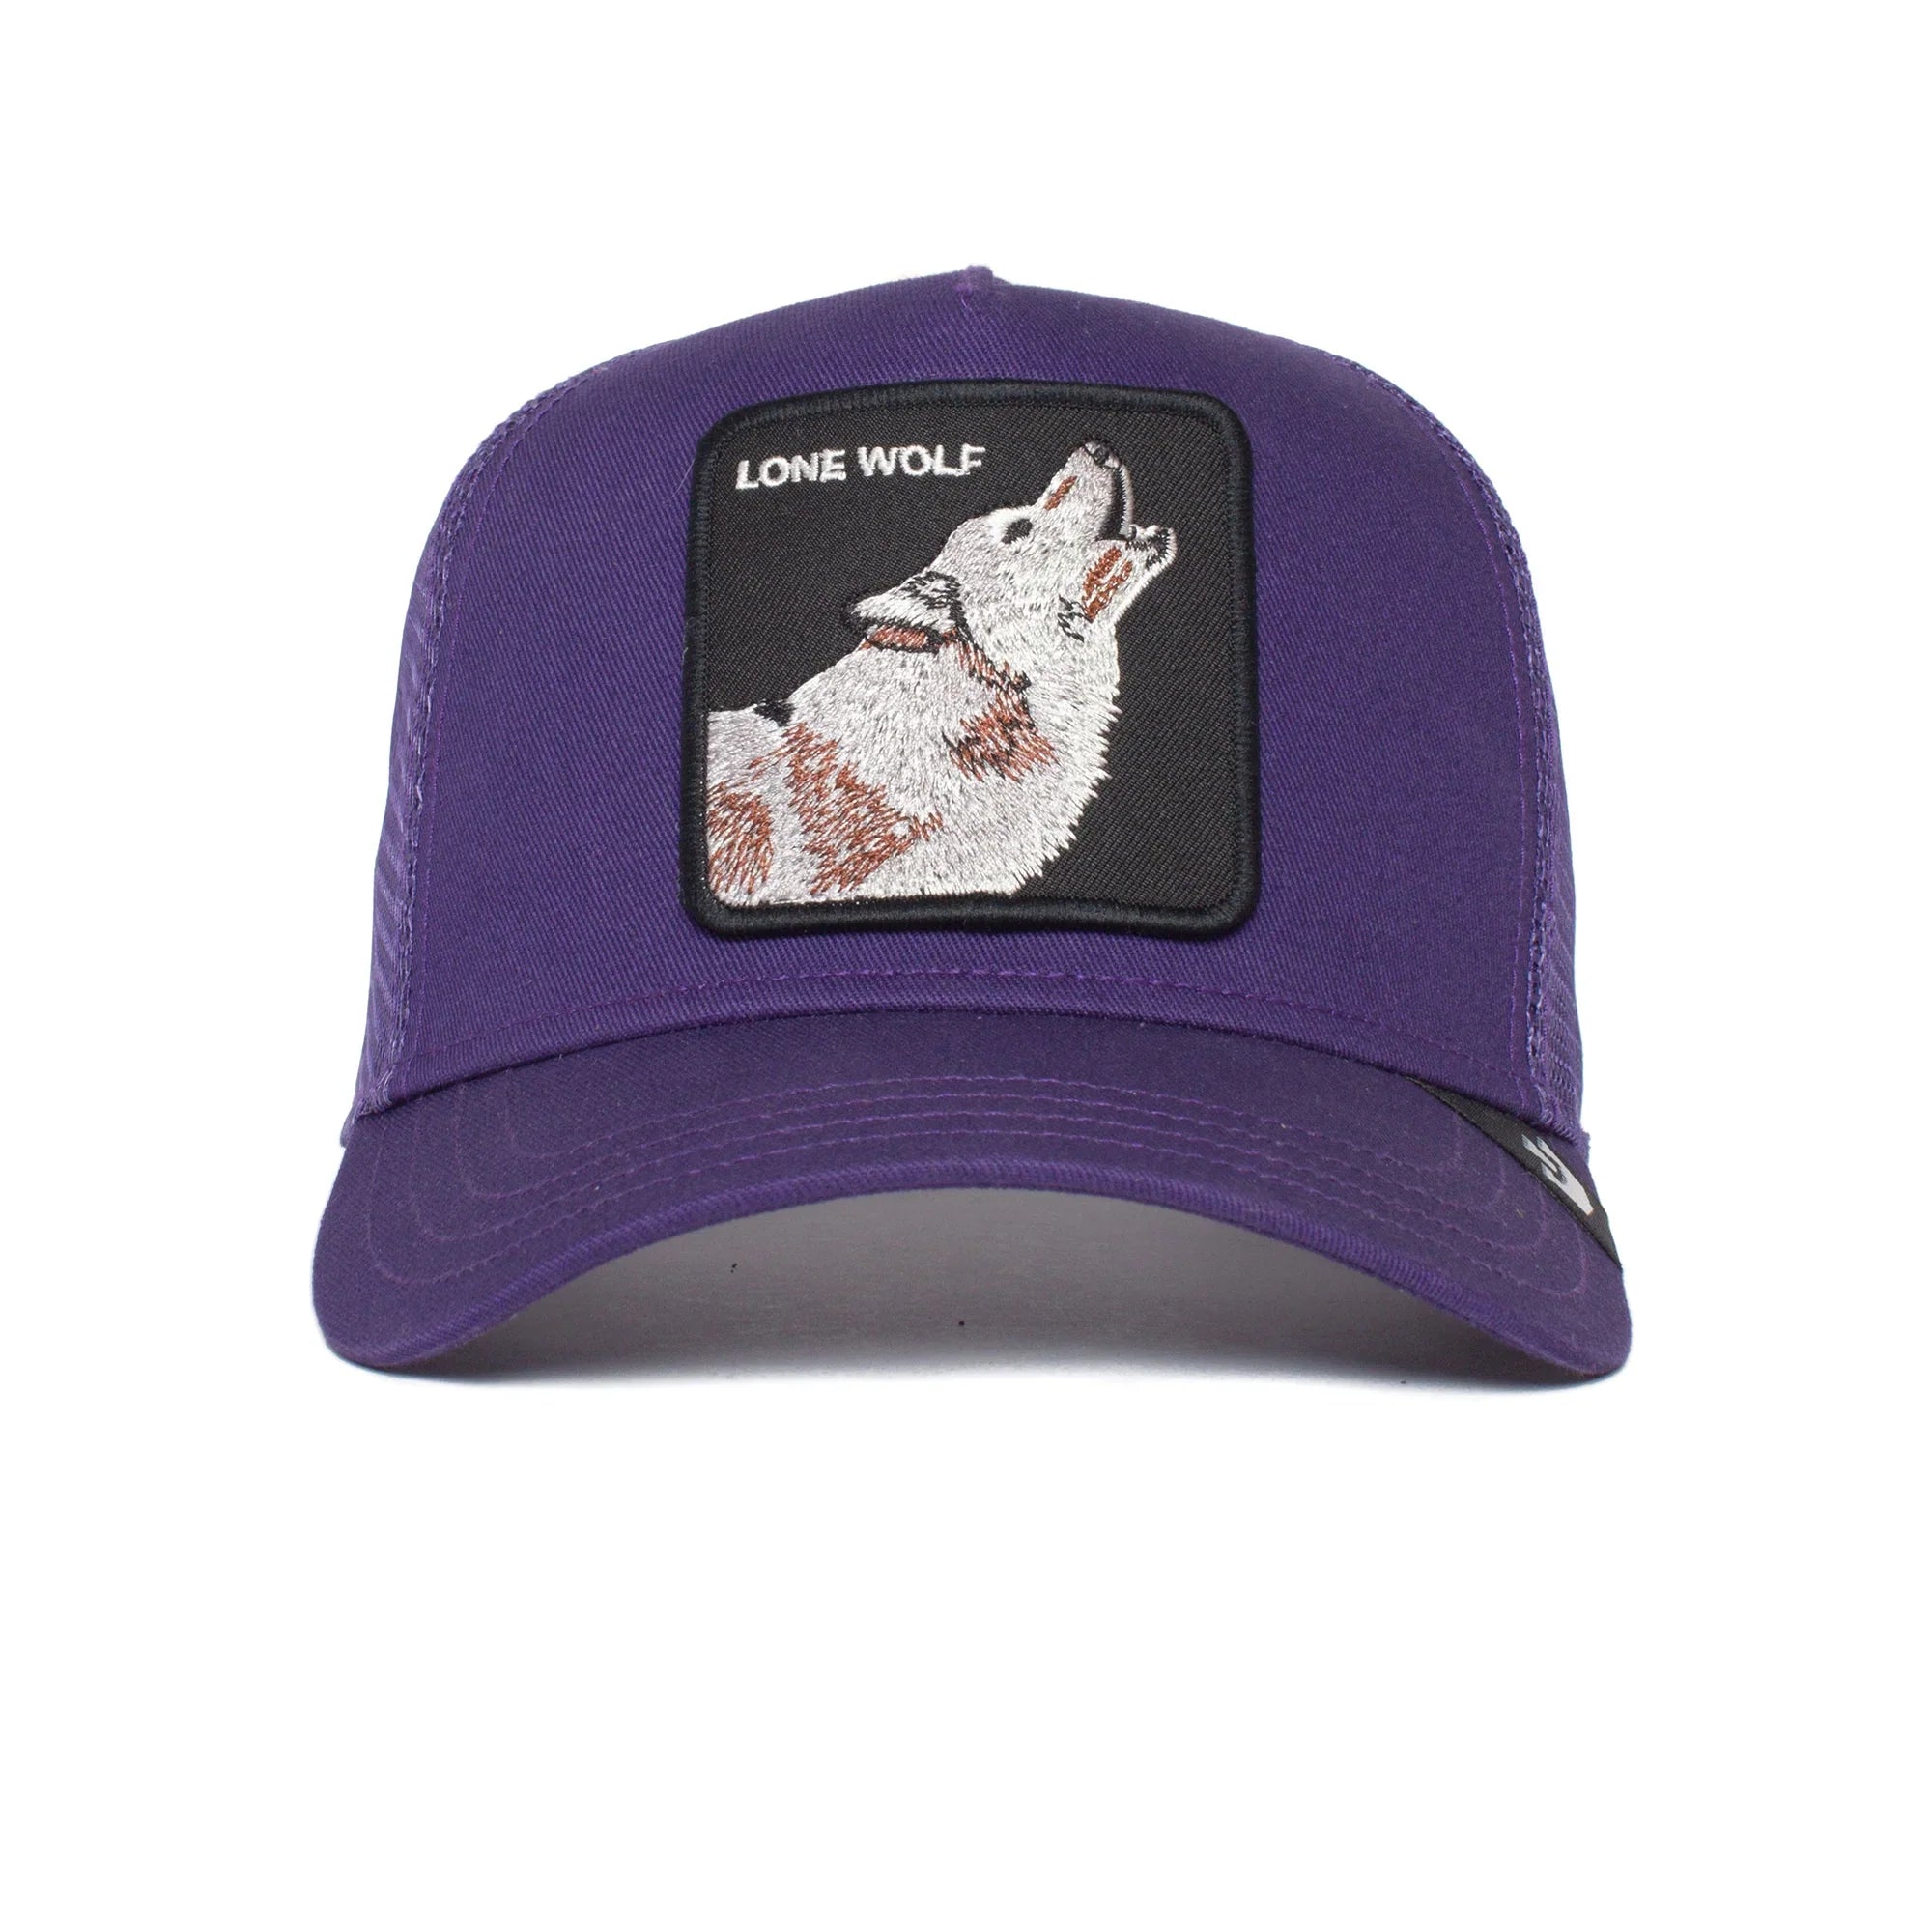 'Goorin Bros. The Lone Wolf Trucker Hat' in 'Purple' colour